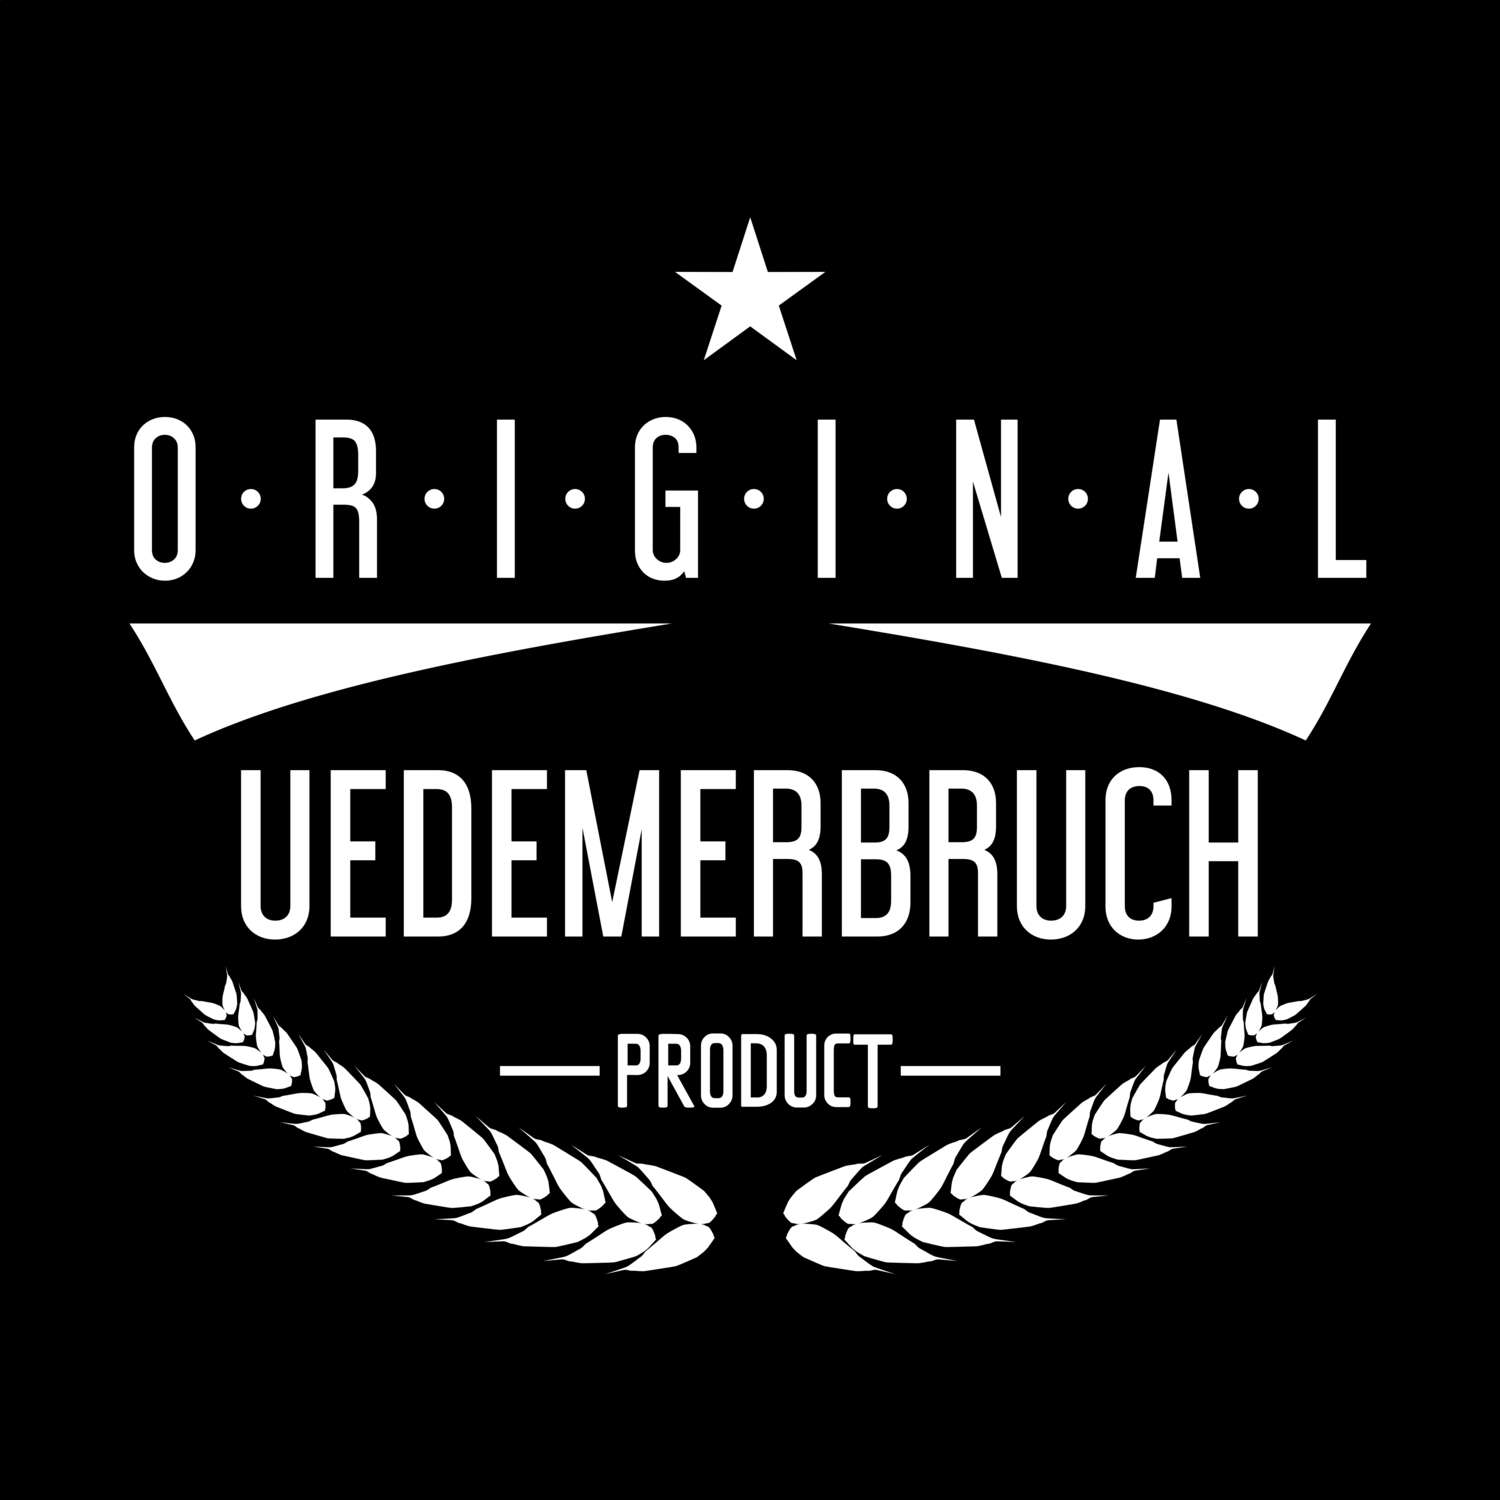 Uedemerbruch T-Shirt »Original Product«